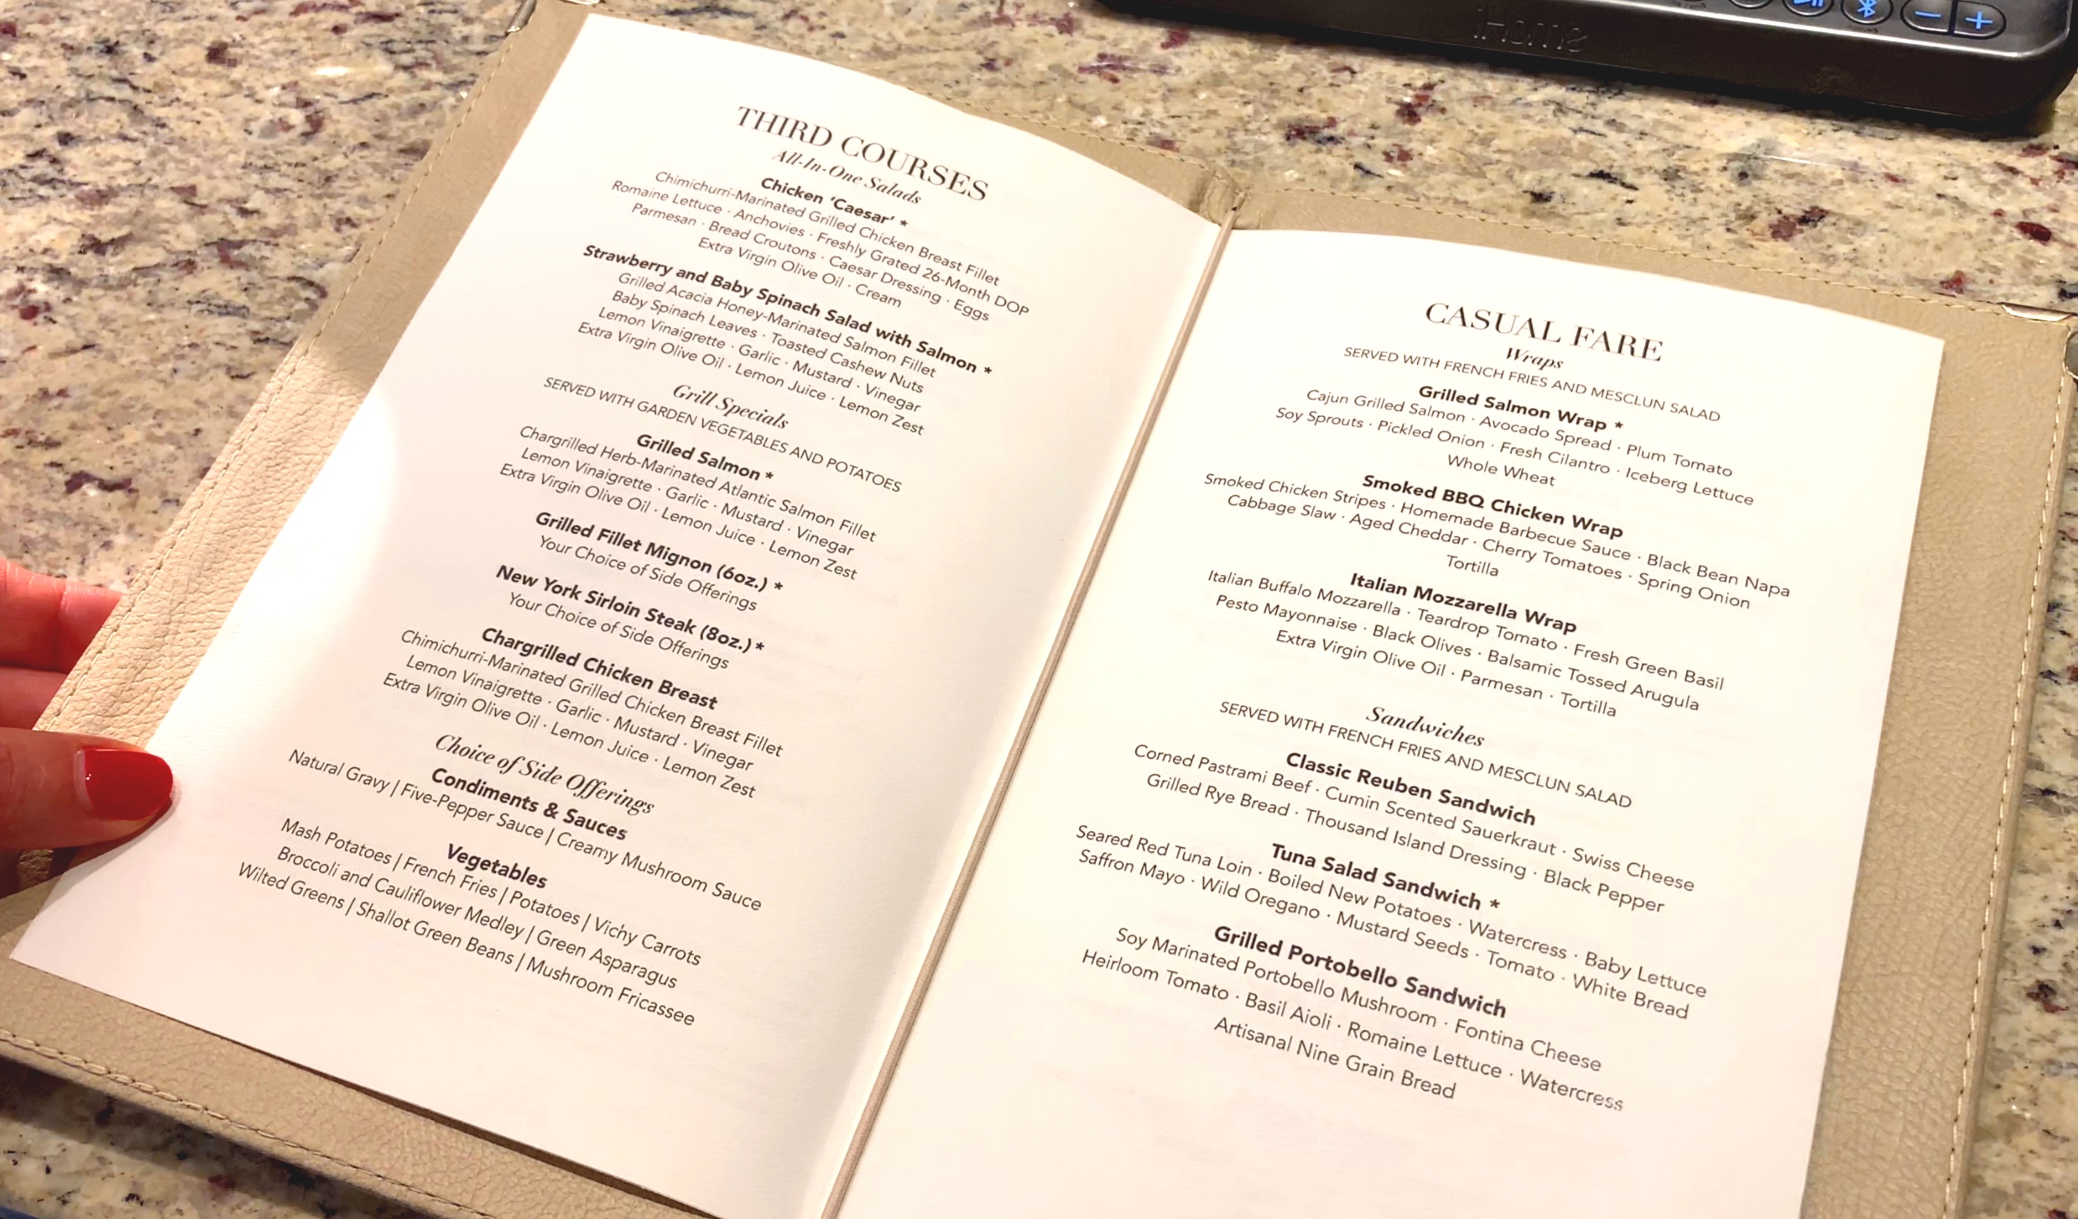  Room service menu.  